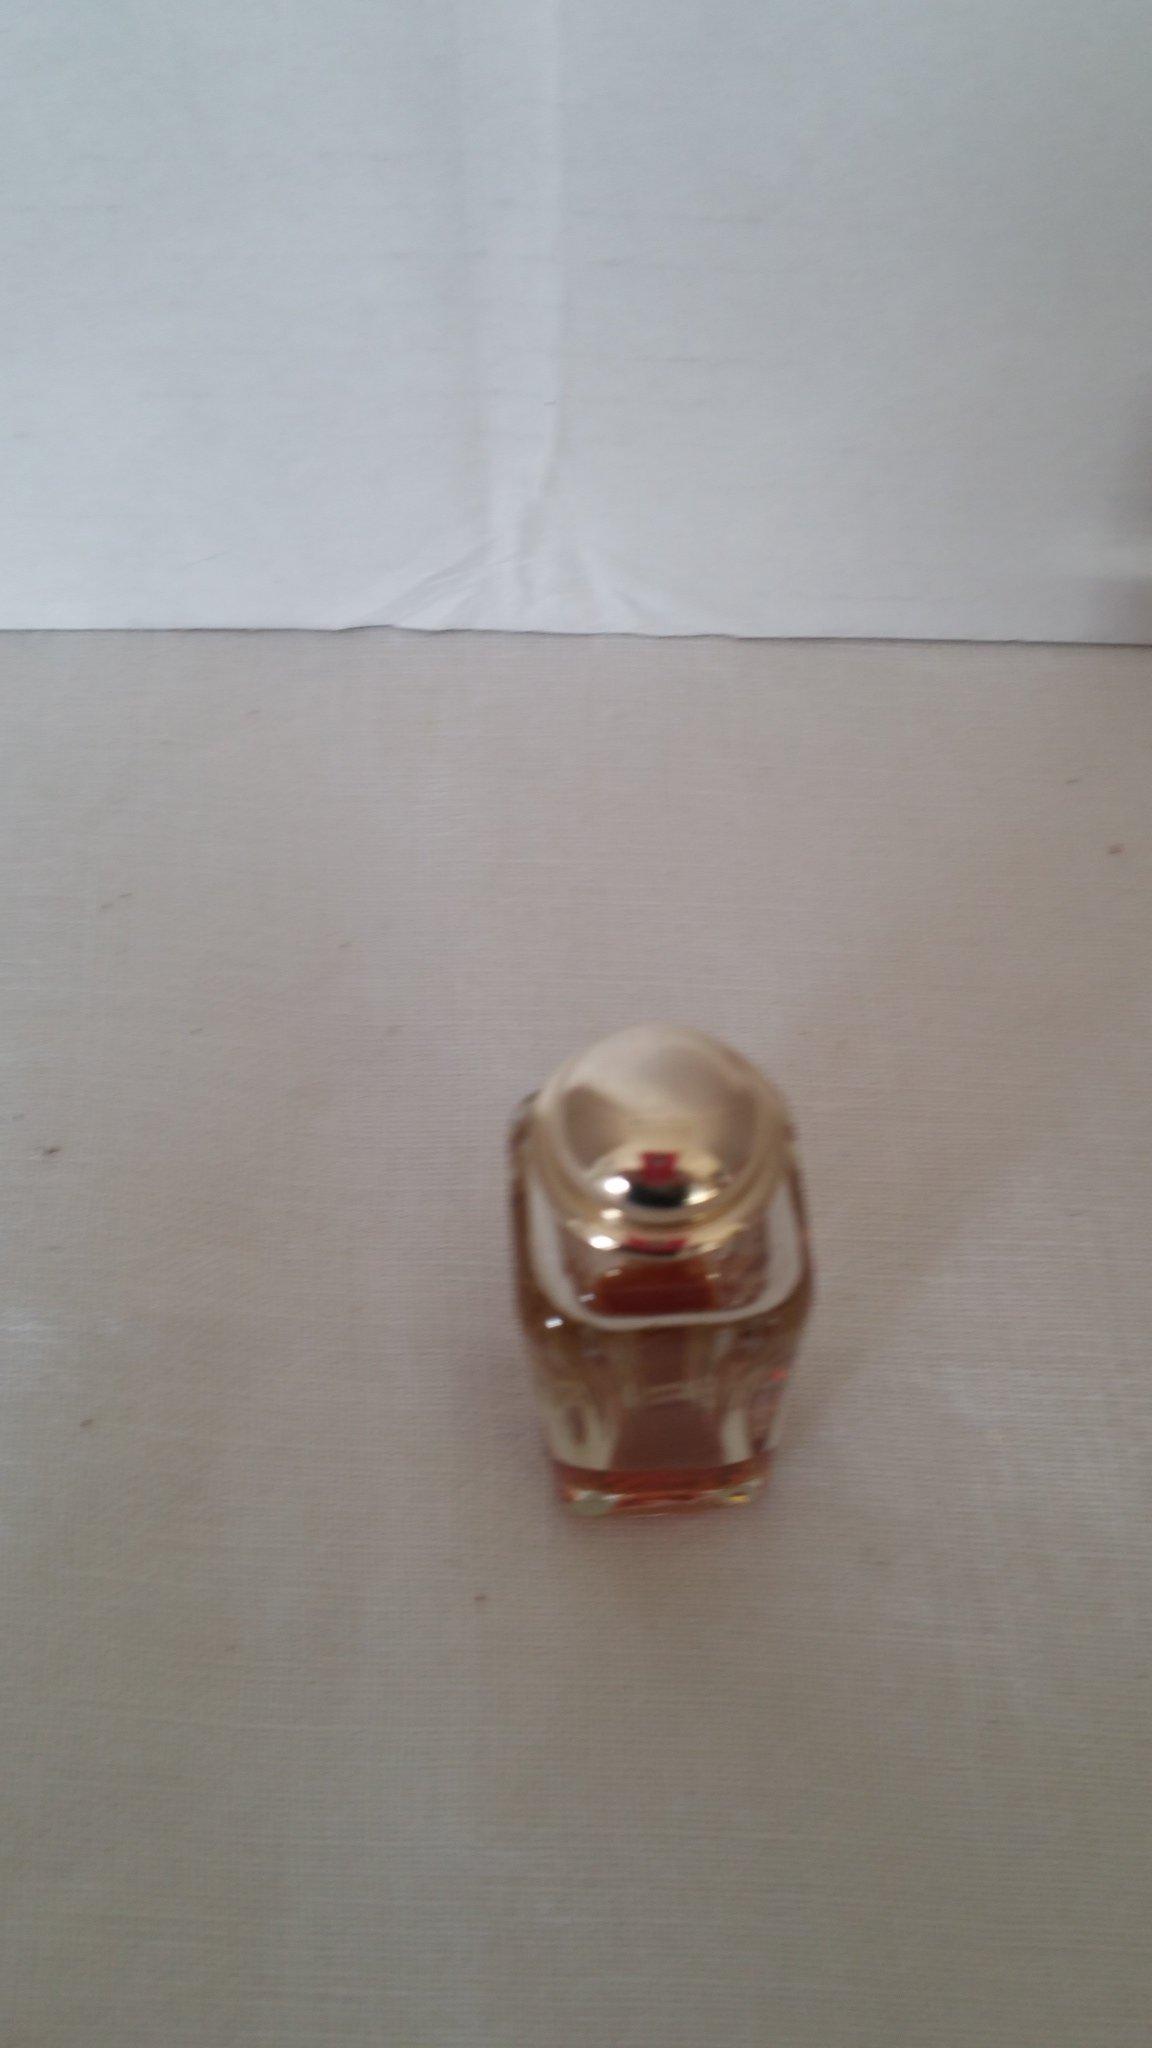 Vintage Perfume bottle from Hermes